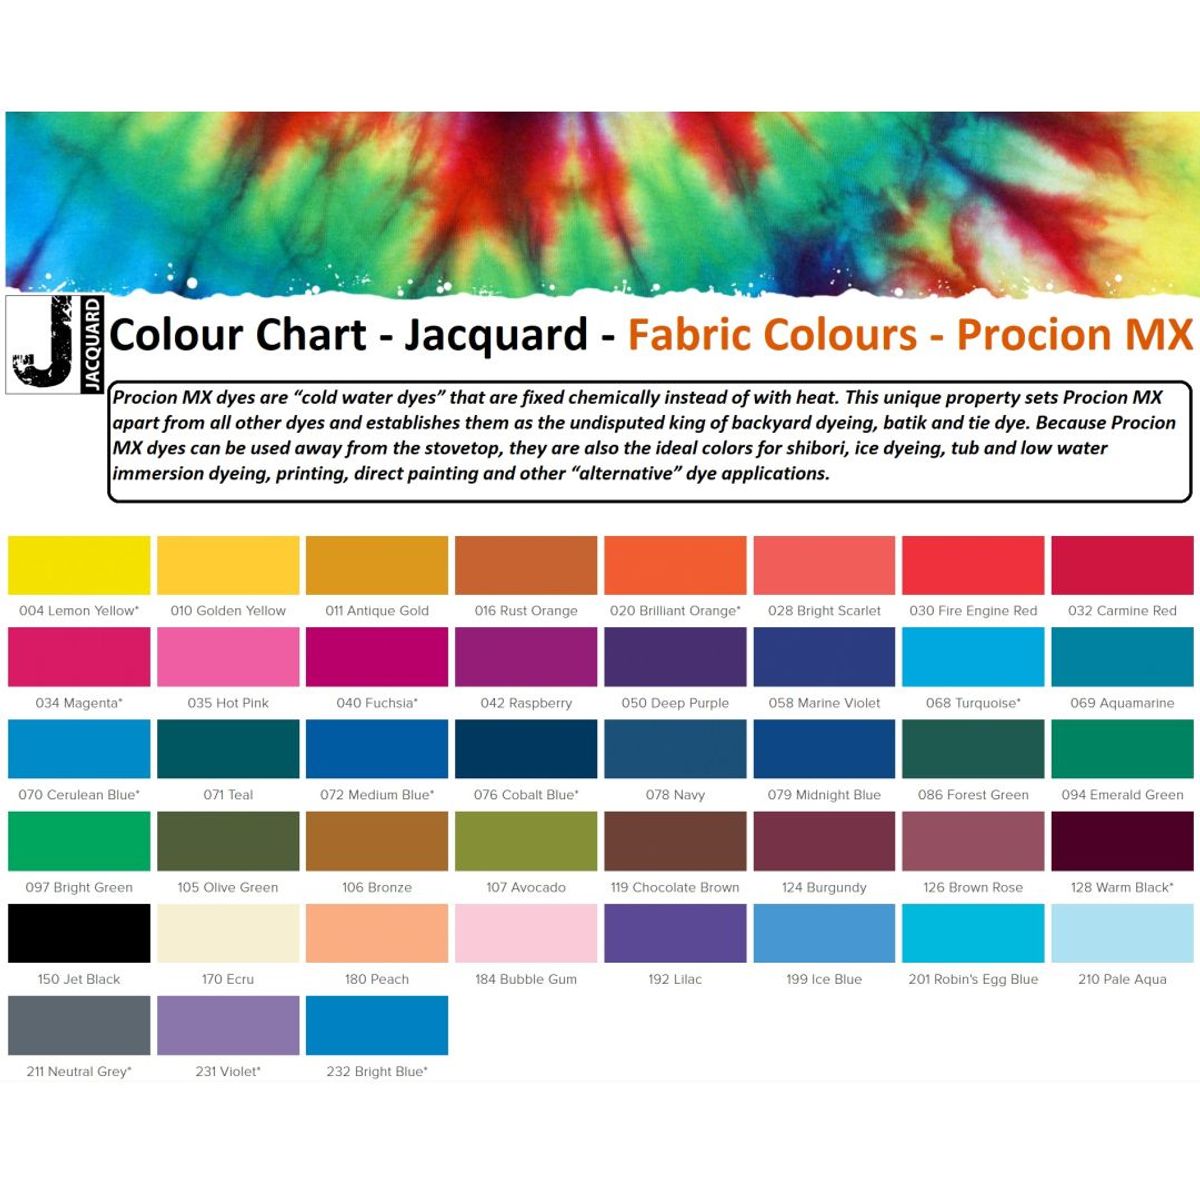 Jacquard - Procion MX Dye - Fabric Textile - Medium Blauw 072